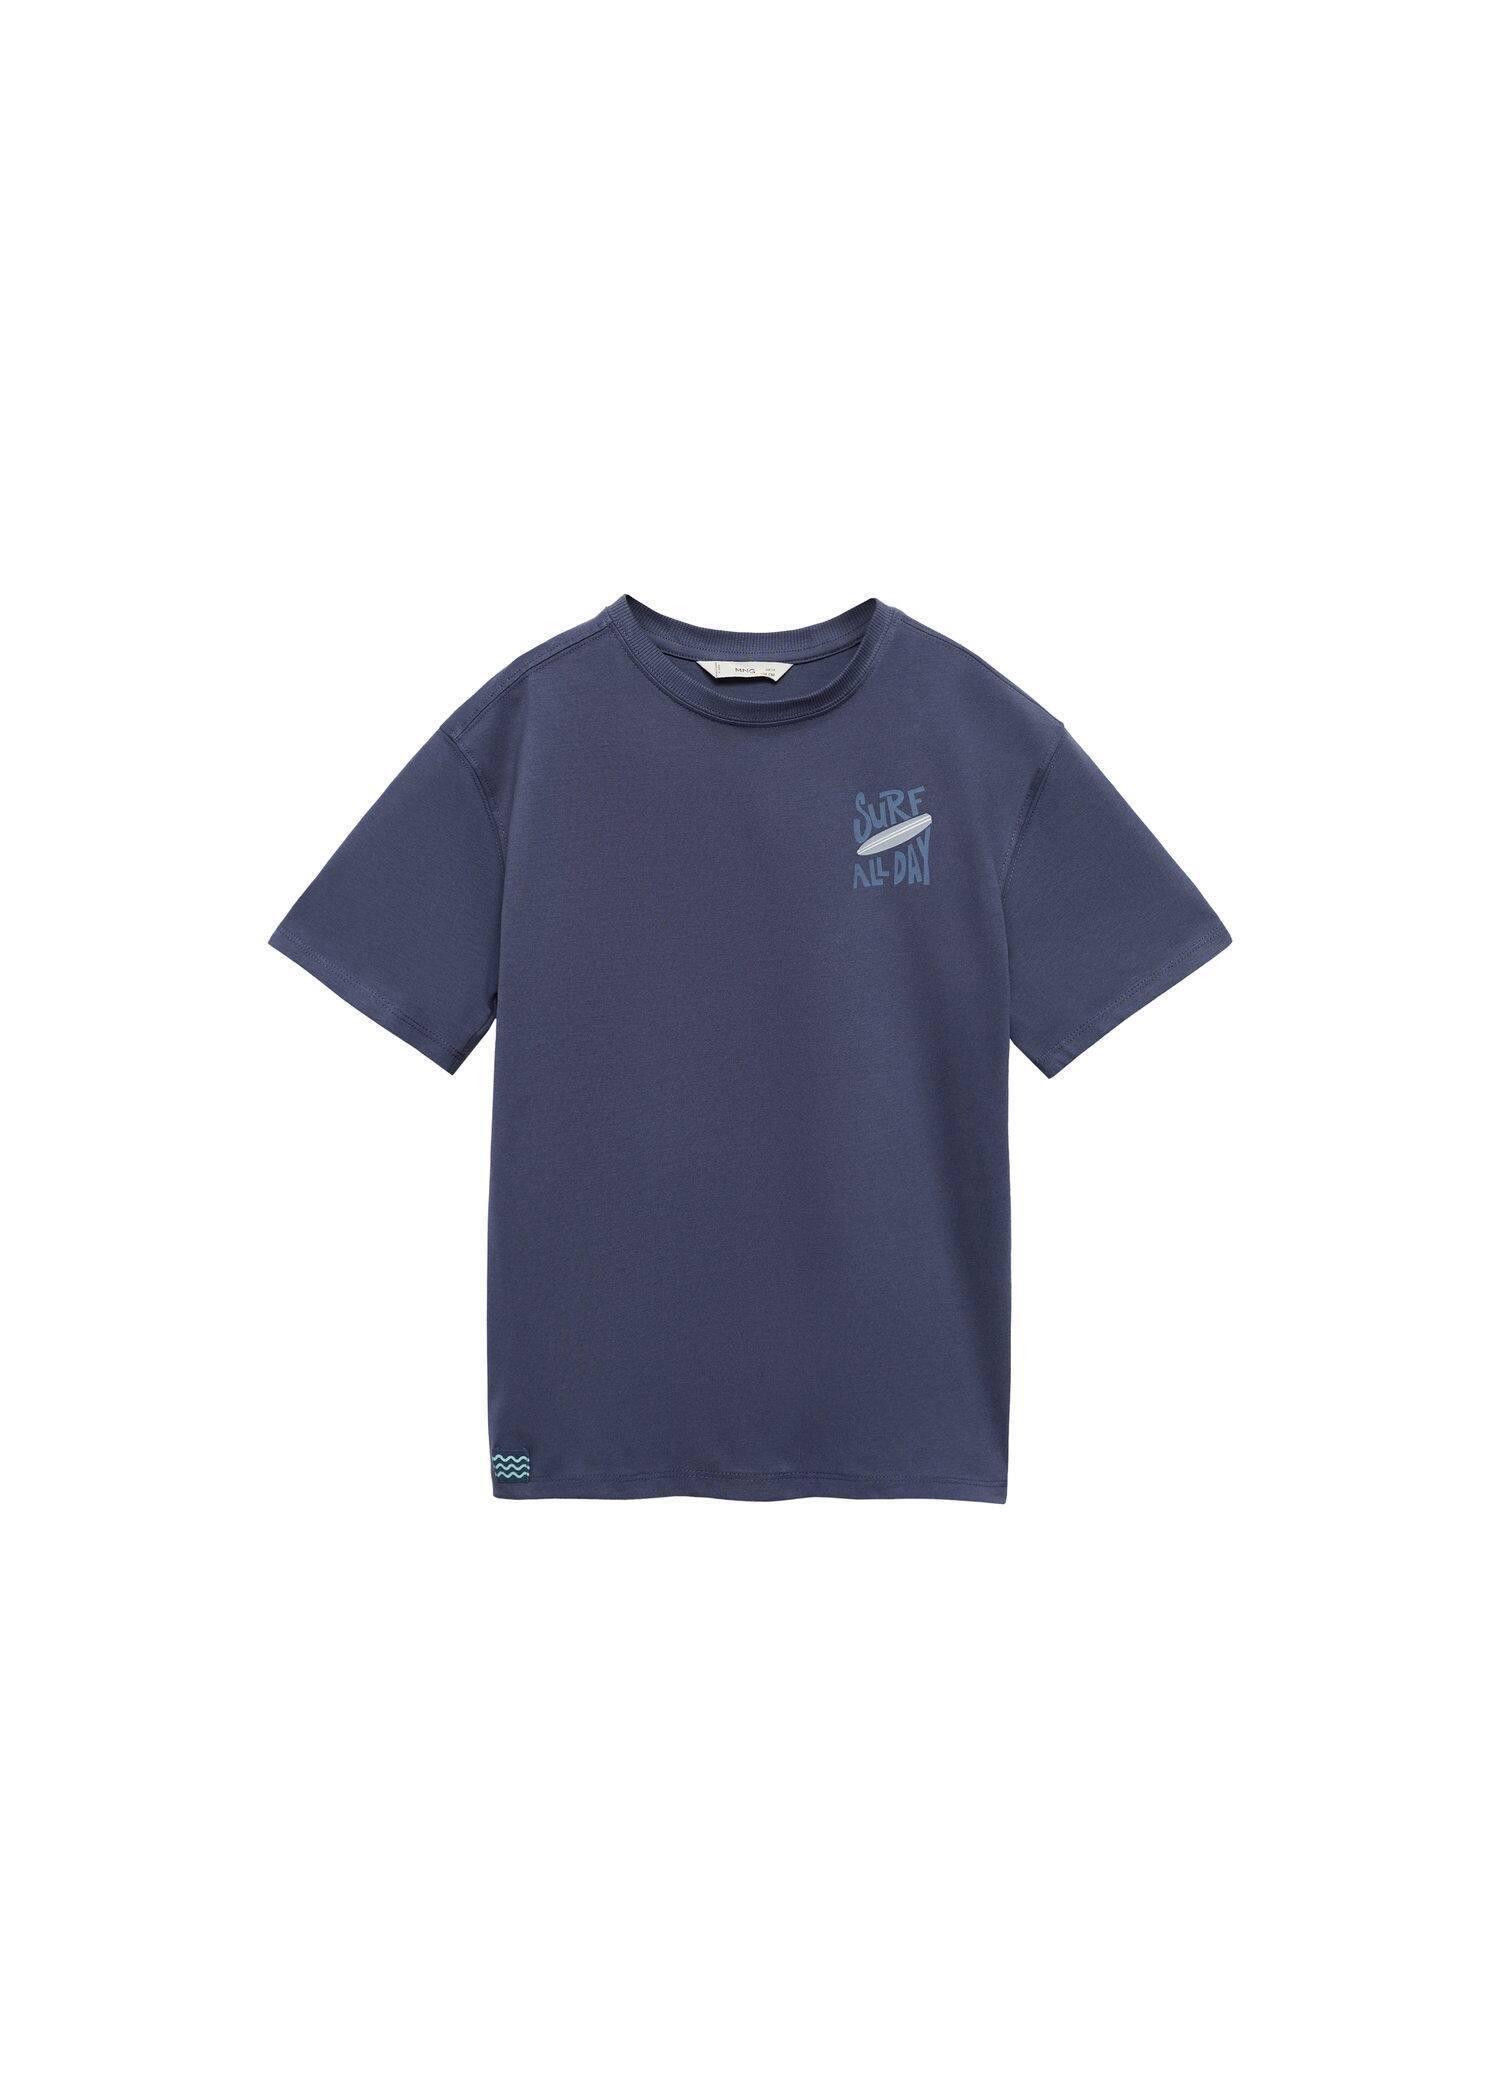 Mango - Blue Surf Printed T-Shirt, Kids Boys